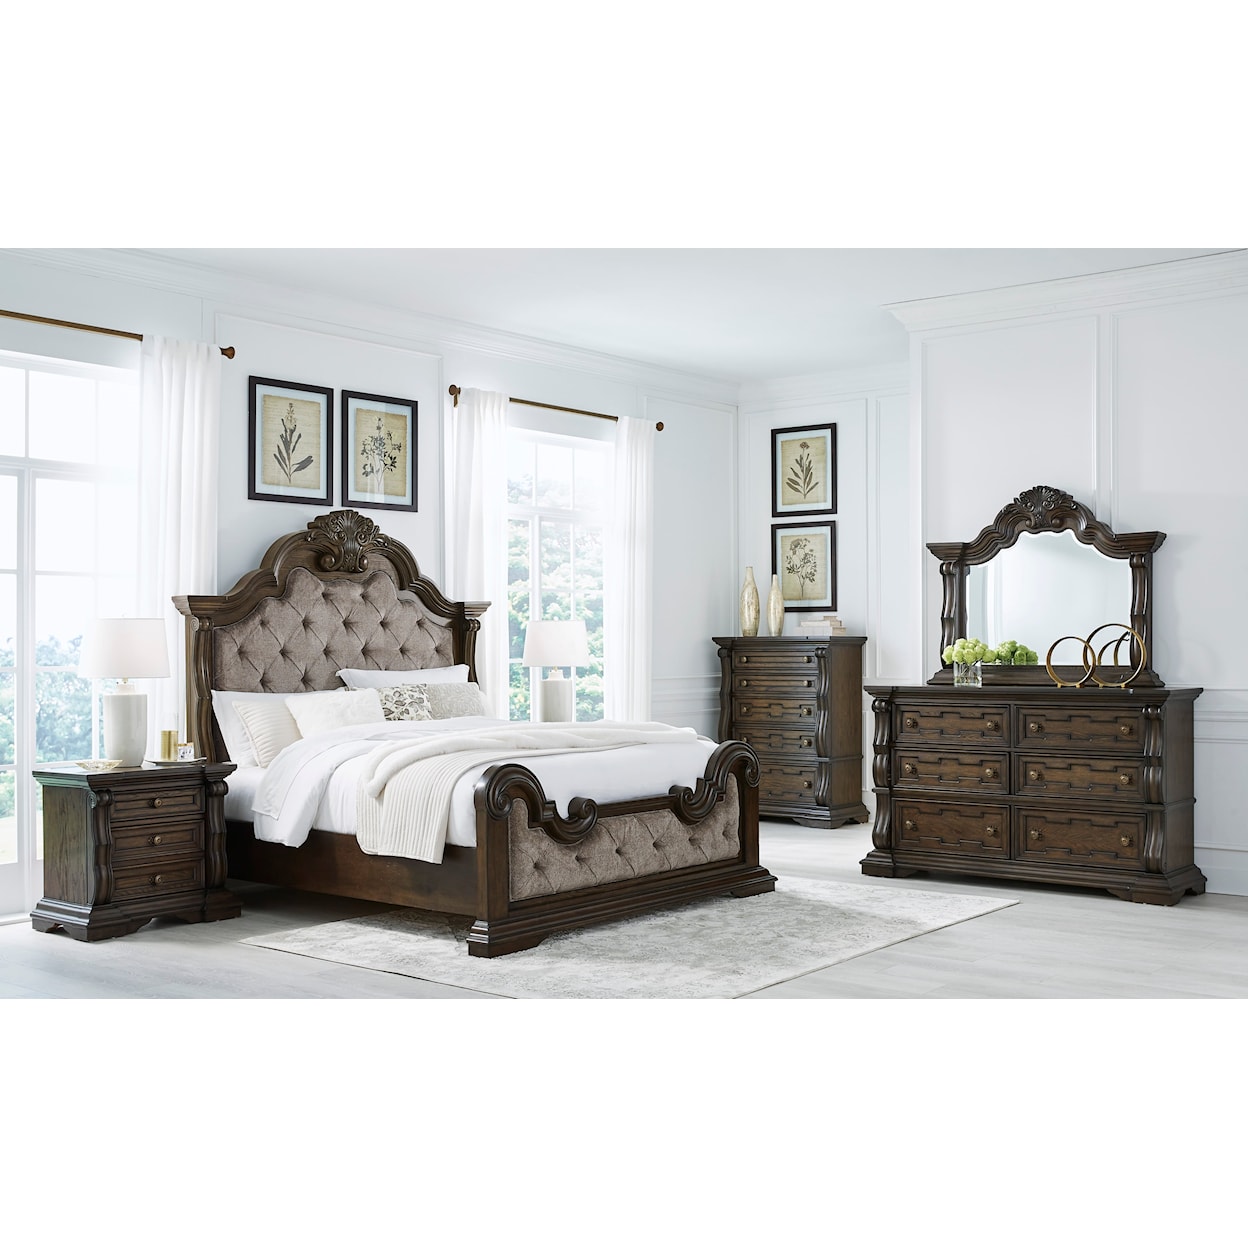 Ashley Furniture Signature Design Maylee Queen Bedroom Set